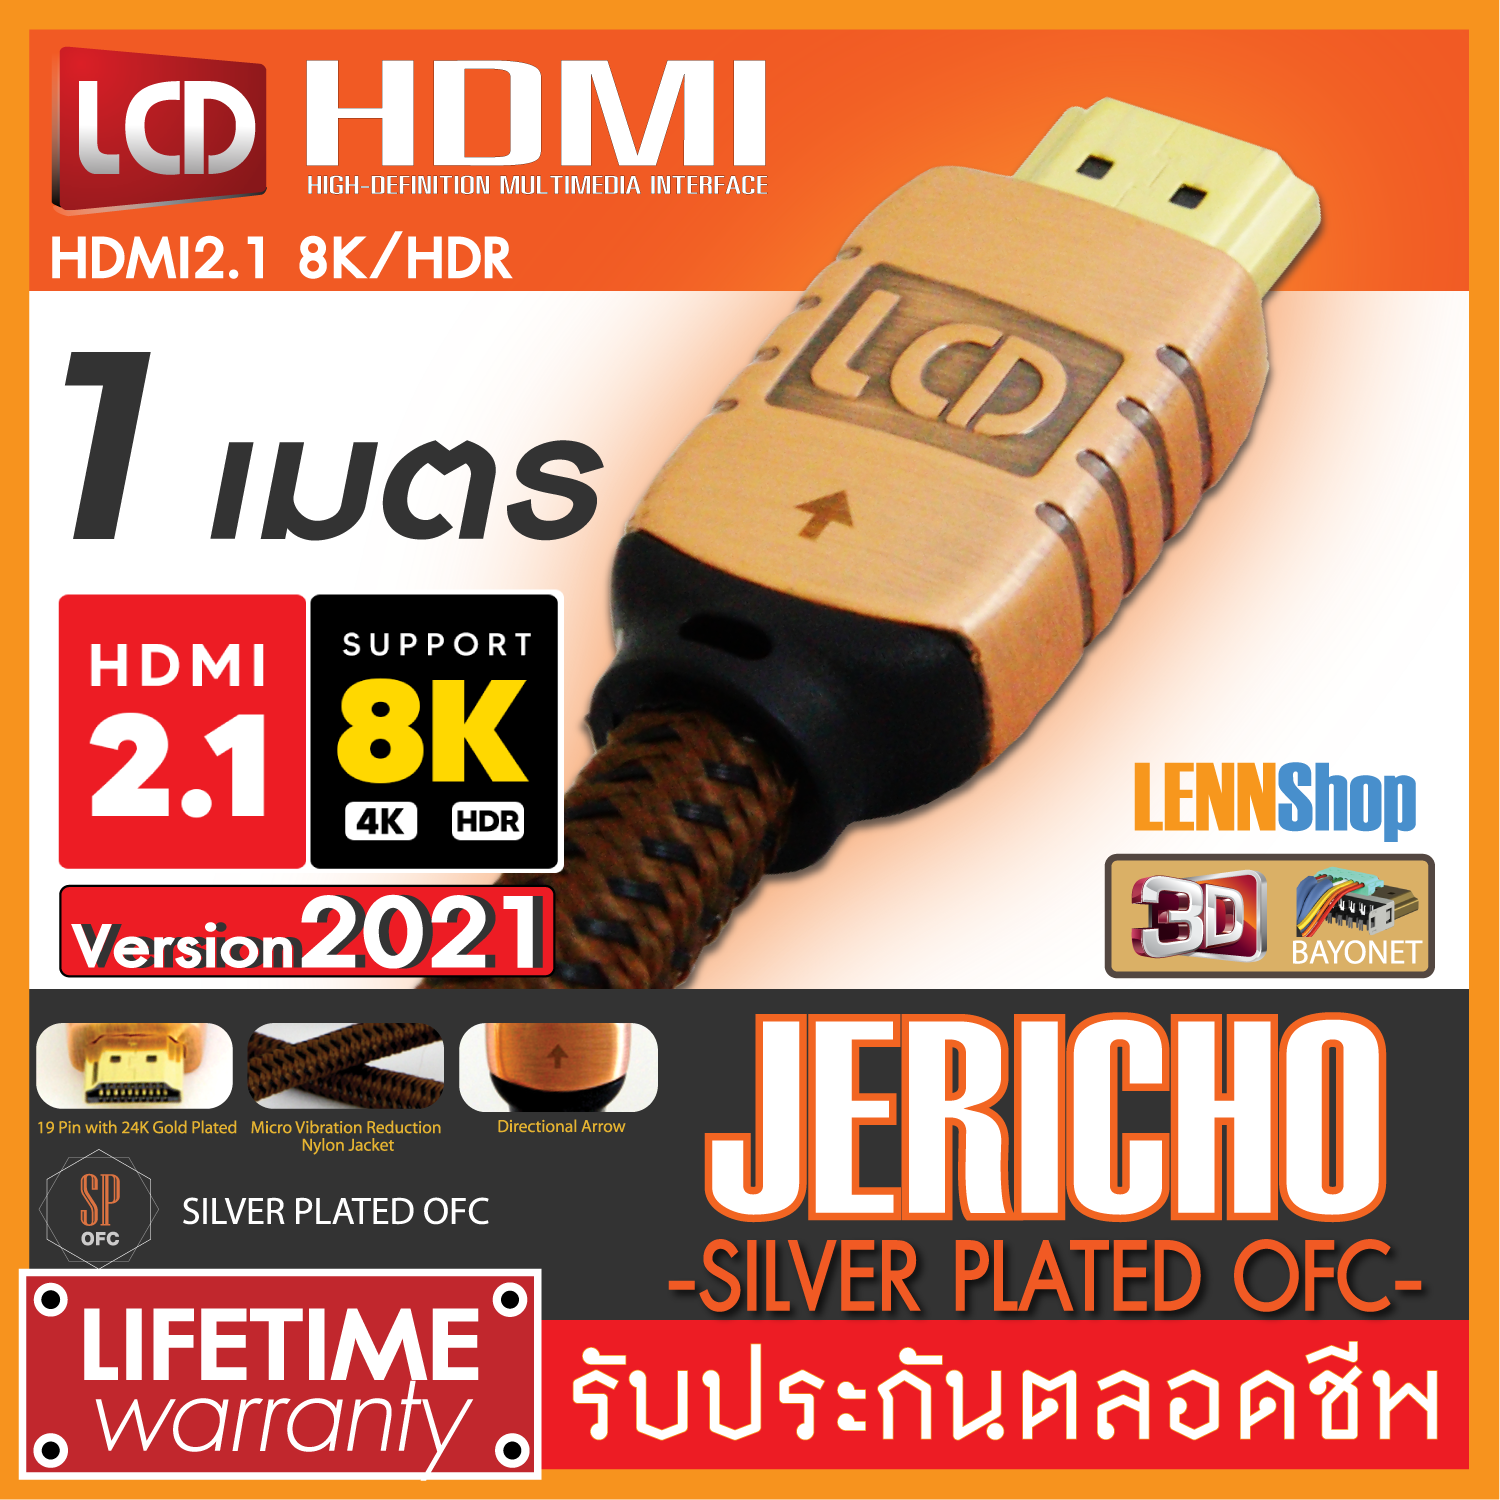 JERICHO 1M New Version 2021 HDMI SilverPlate OFC ของแท้ 8K/HDR HDMI V2.1 รองรับระบบภาพ 8K/HDR , 3D, ARC, Dolby Vision, H10 ระบบเสียง Dolby Atmos DtsX / ยาว 1 เมตร  / LENNSHOP